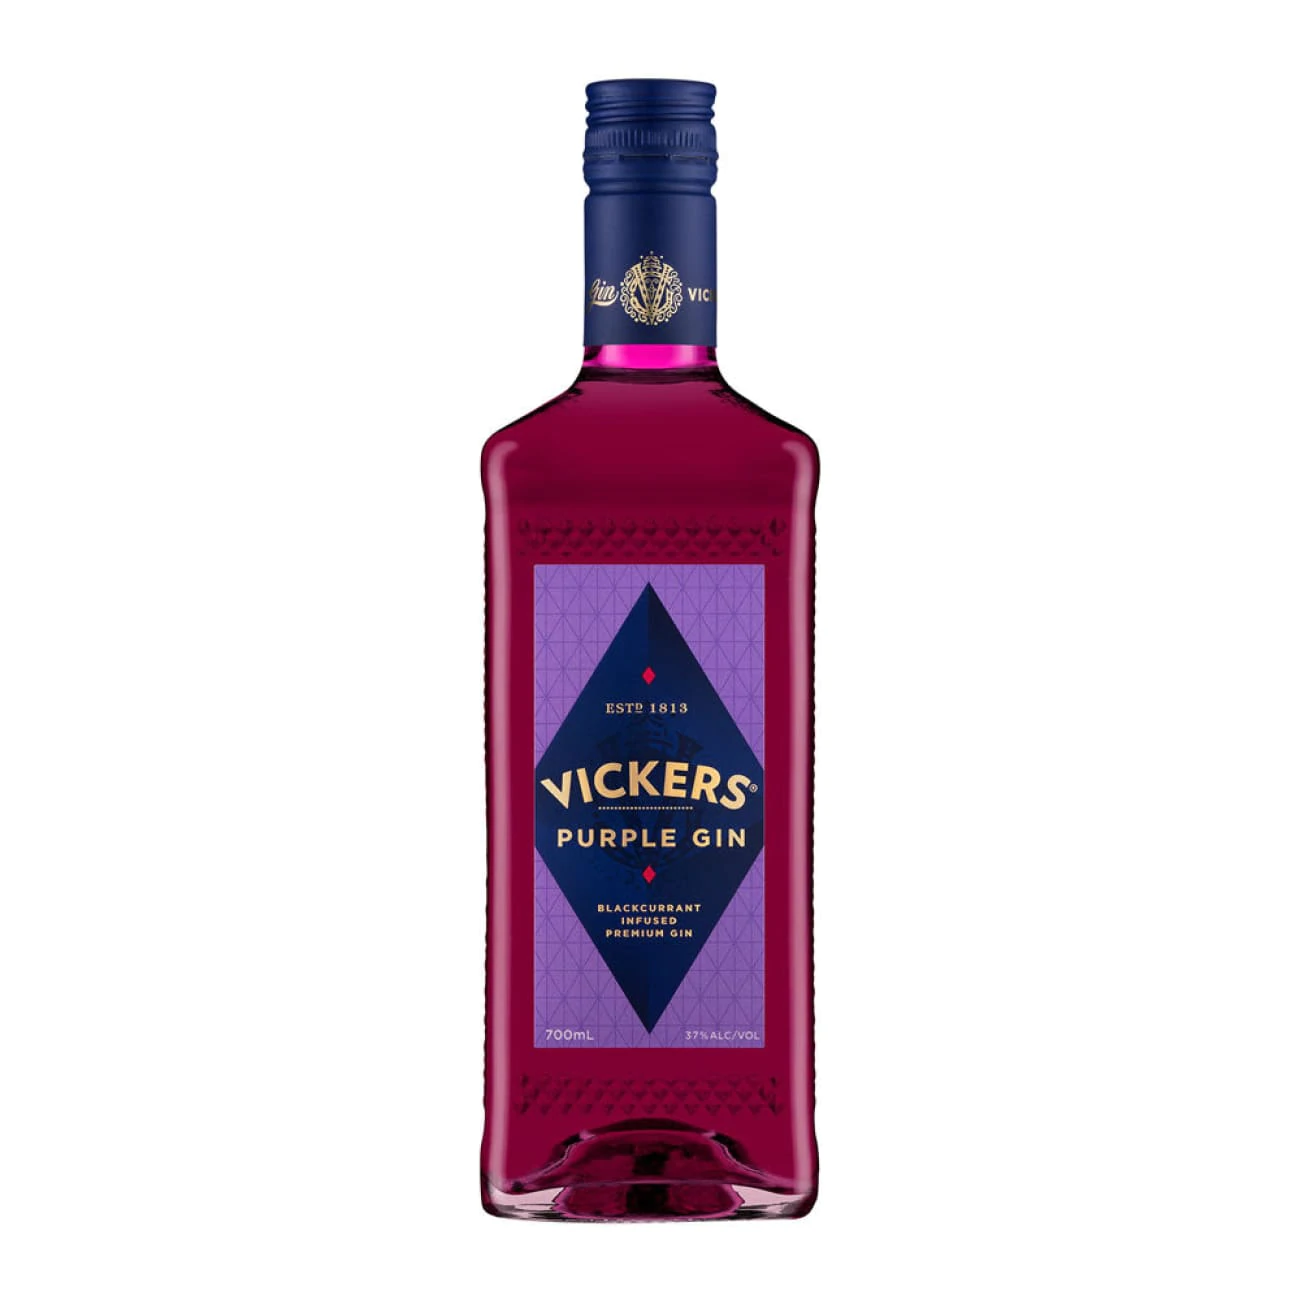 Vickers Purple Gin 700ml